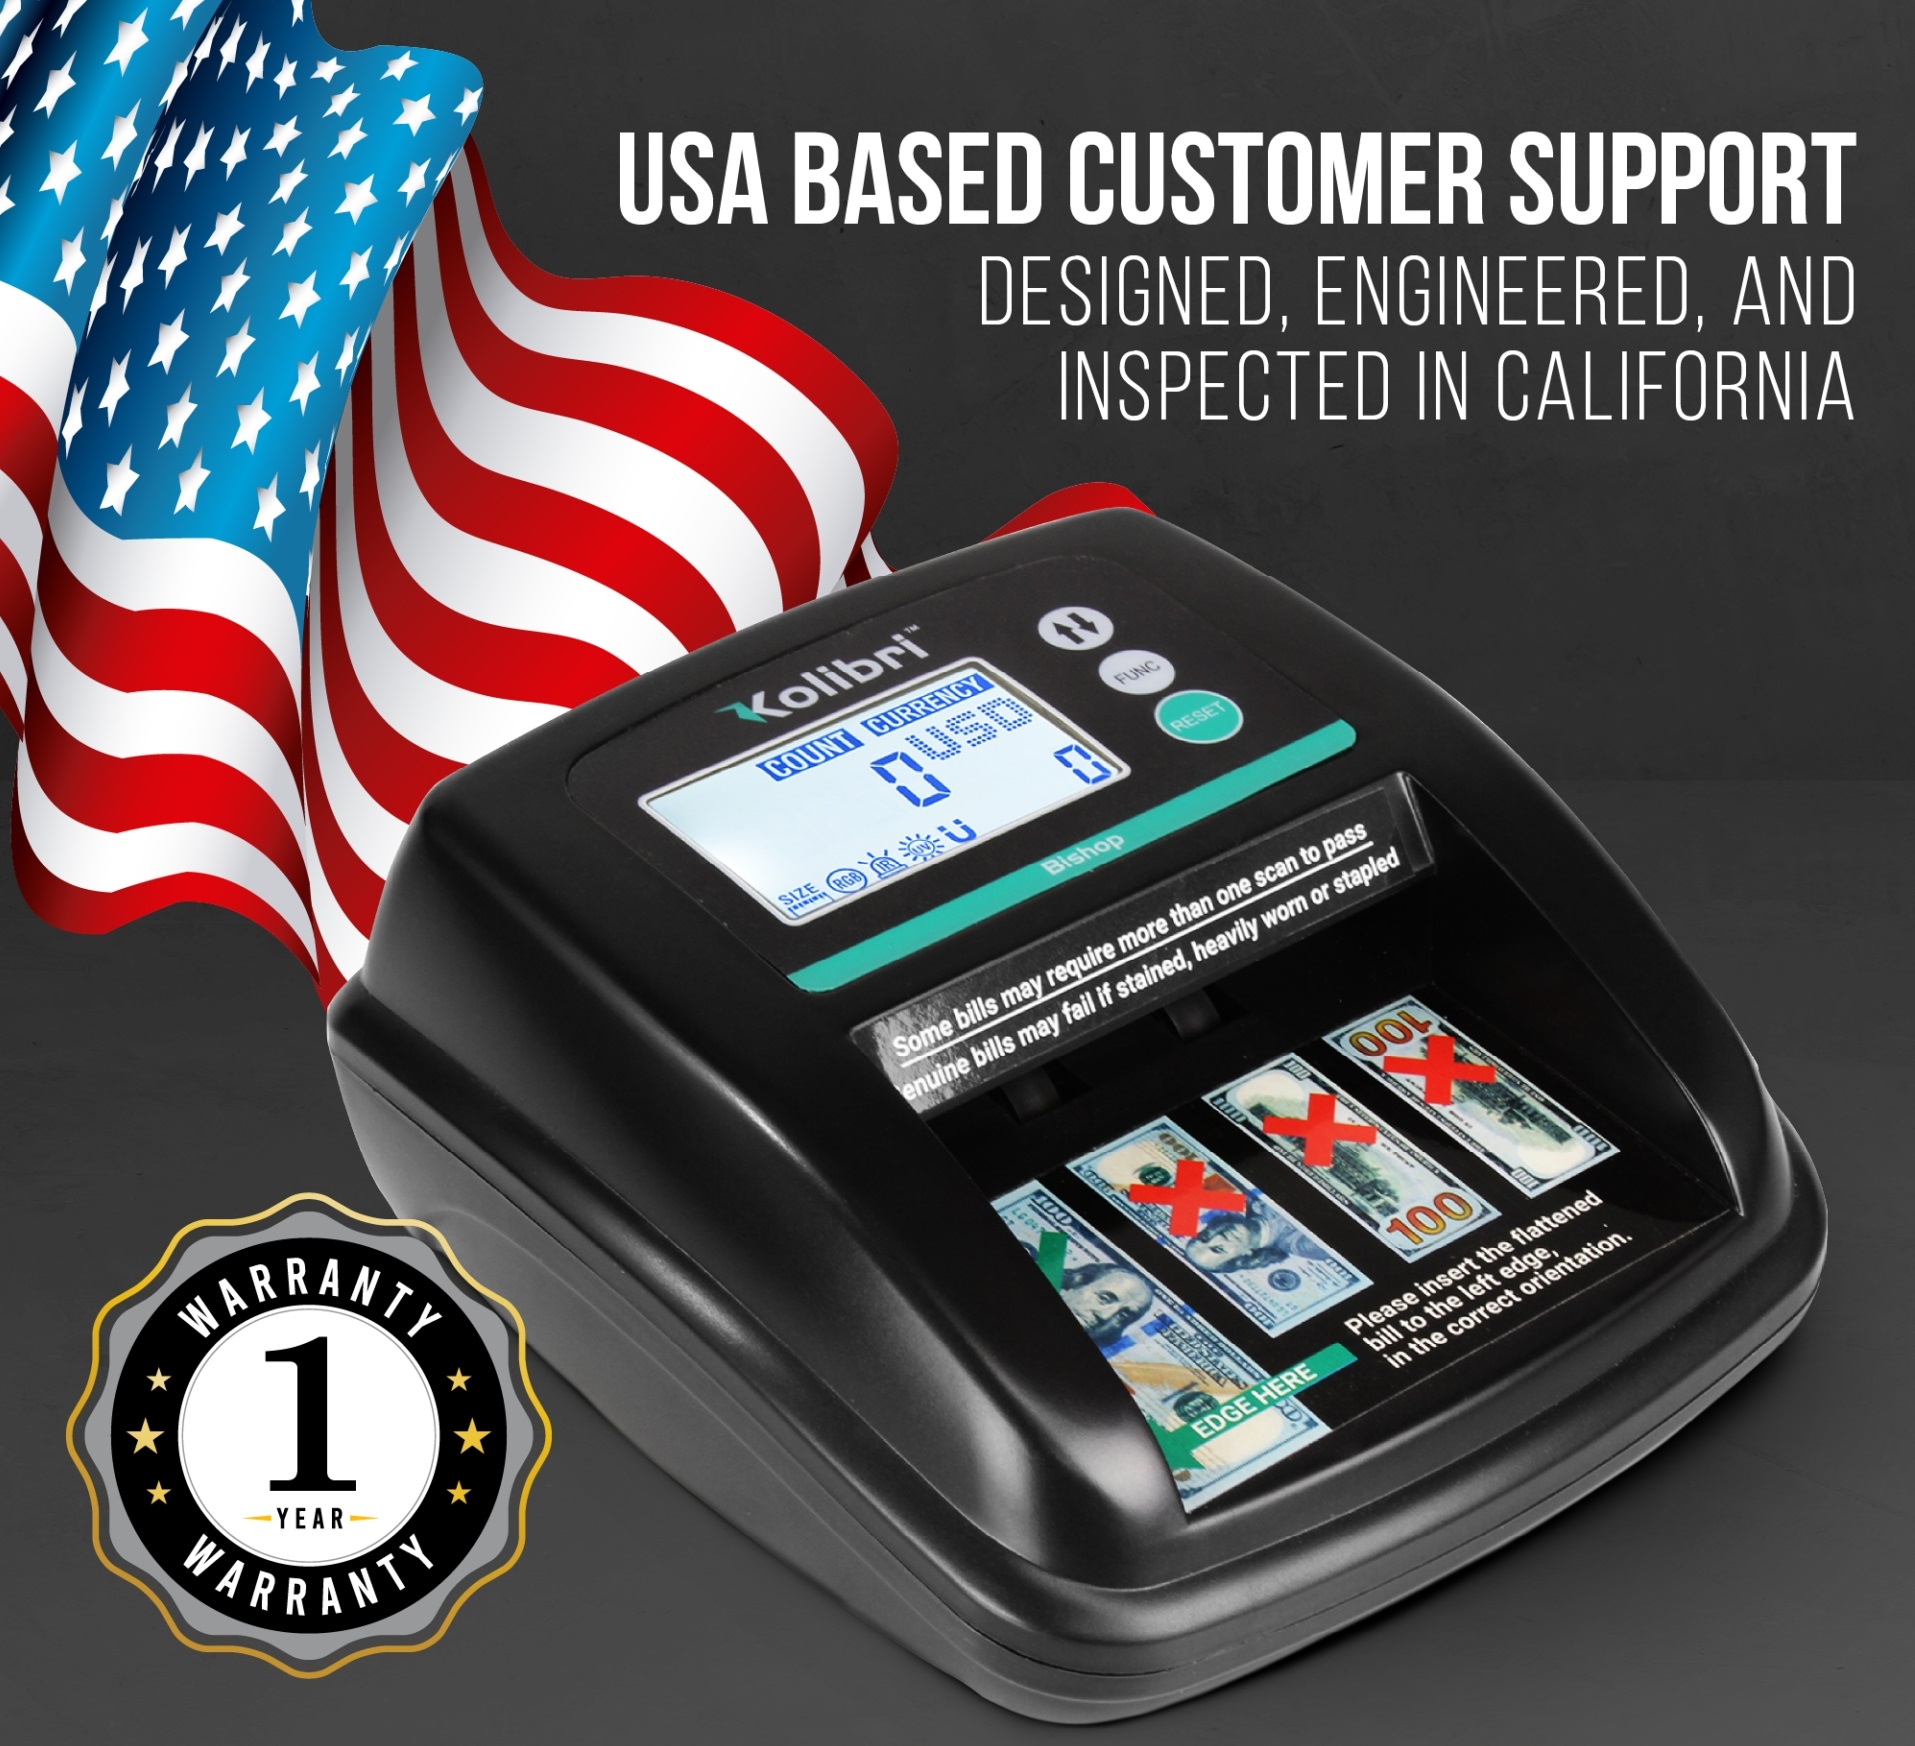 USA Based Customer Support